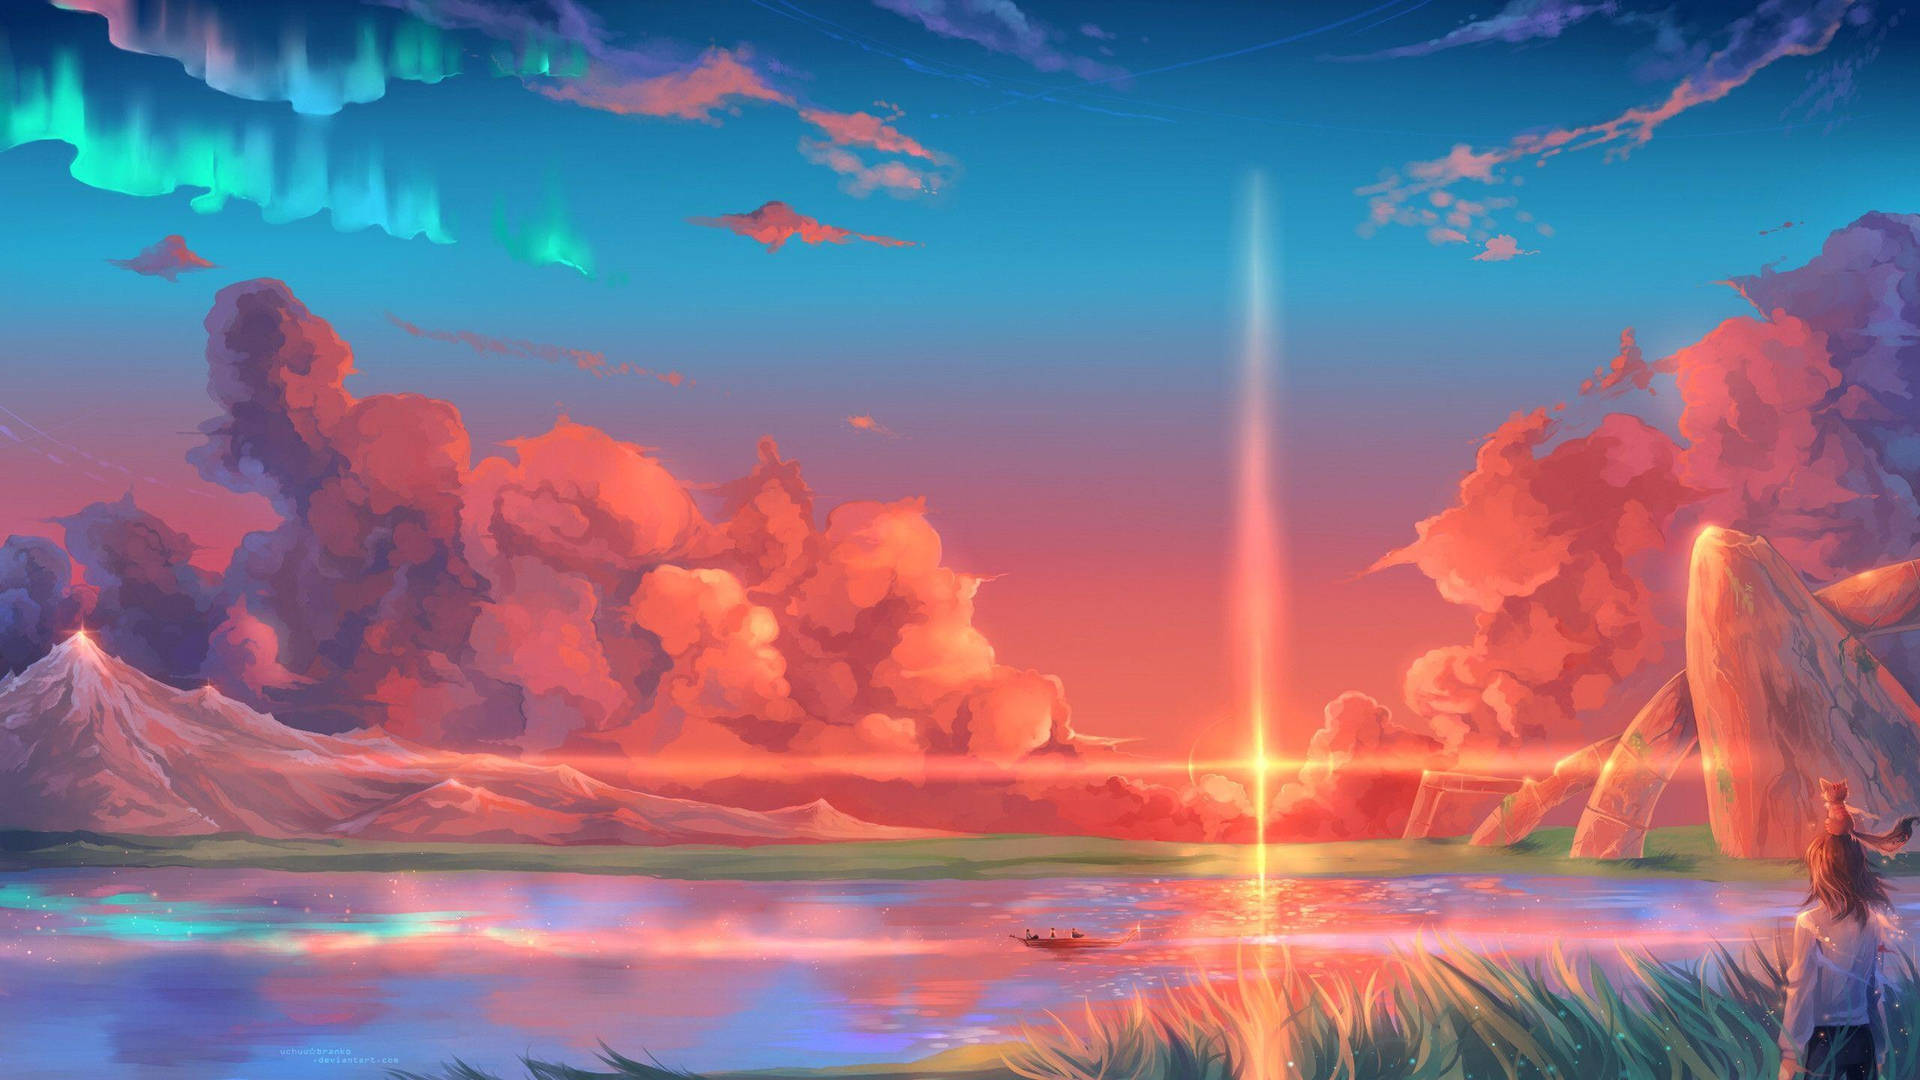 Aesthetic Anime Scenery Background Wallpaper